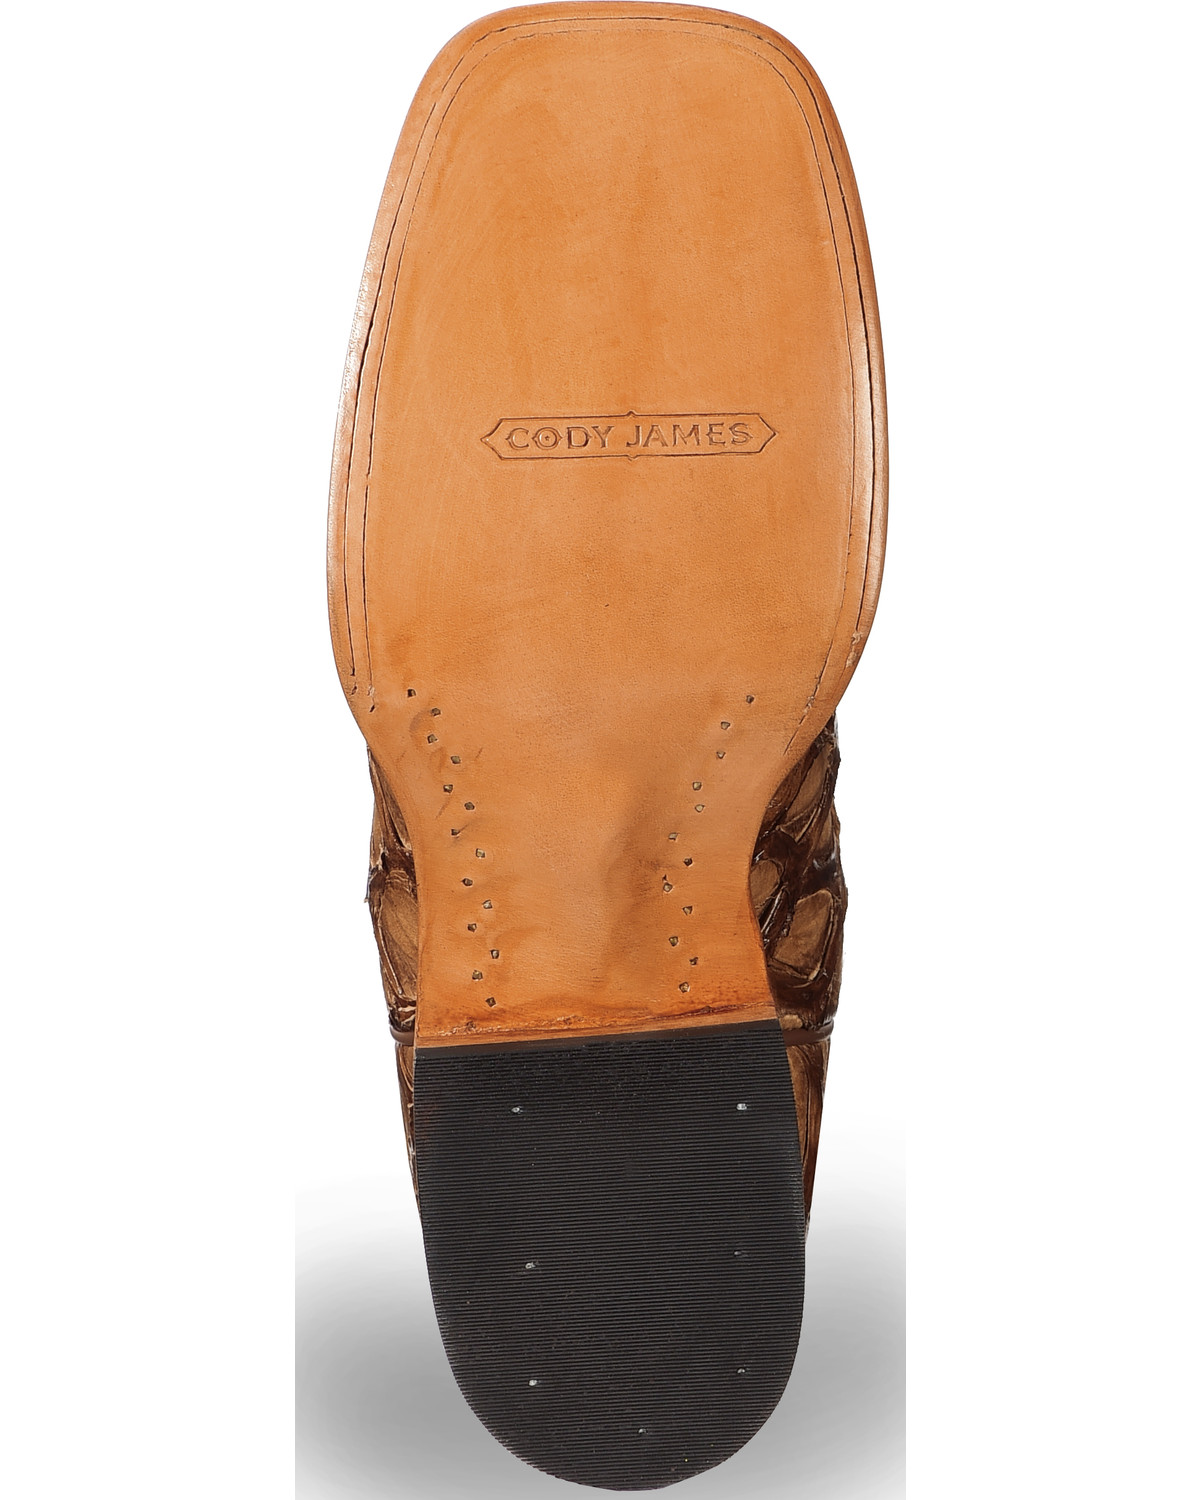 Cody James Pirarucu Exotic Boots - Broad Square Toe | Boot Barn